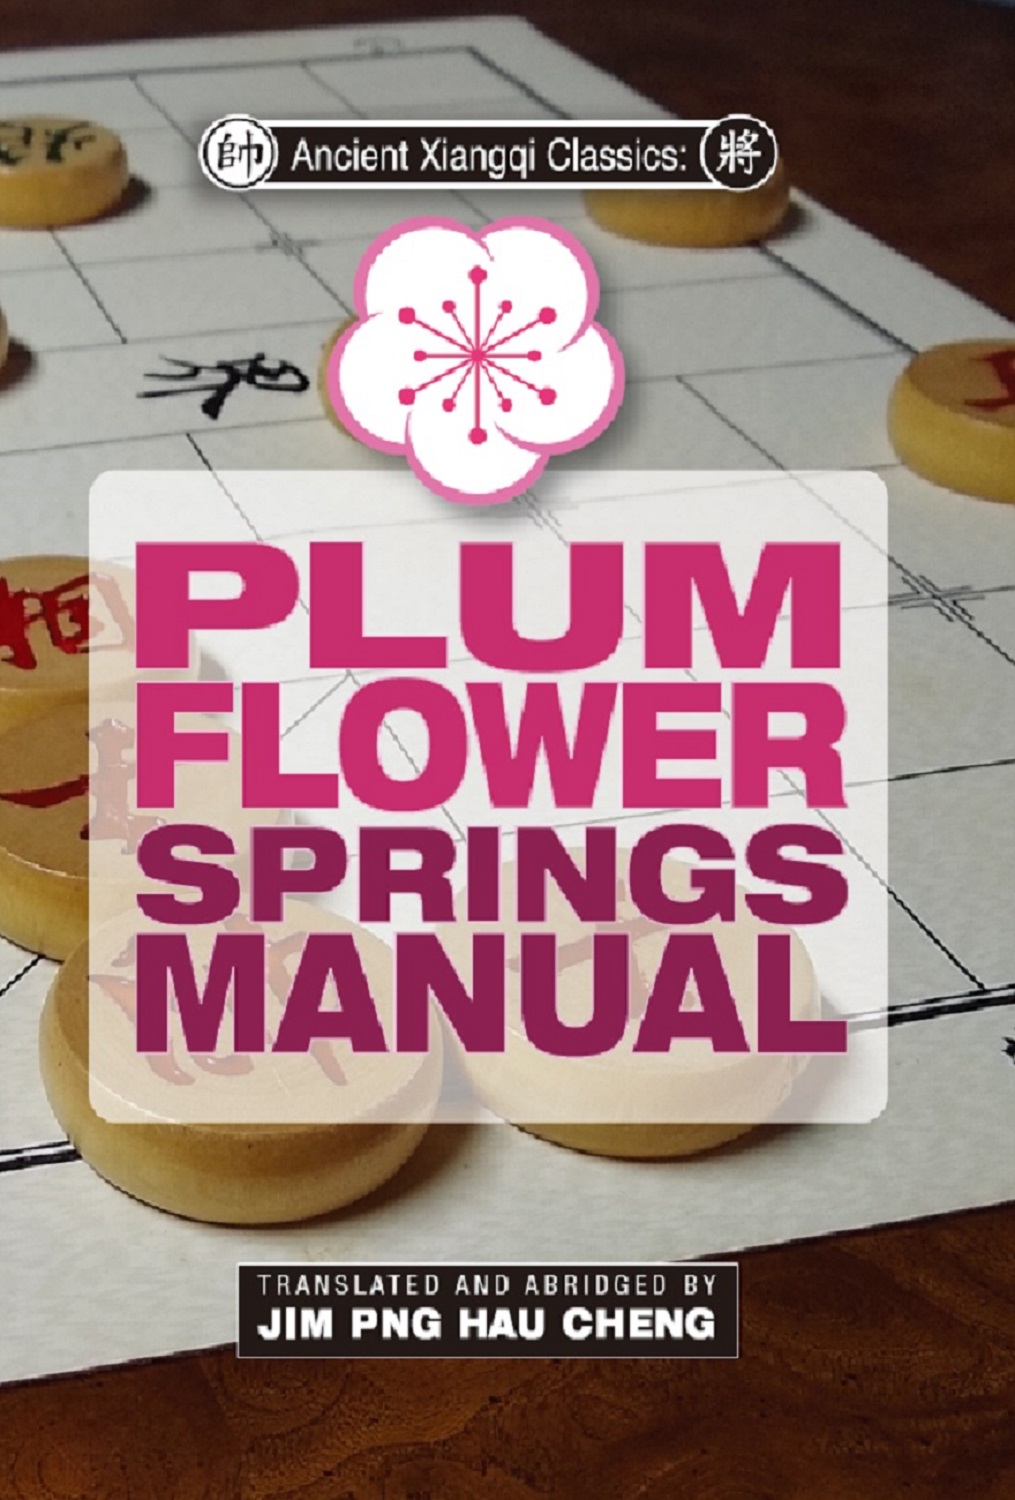 Ancient Xiangqi Manual: Plum Flower Springs